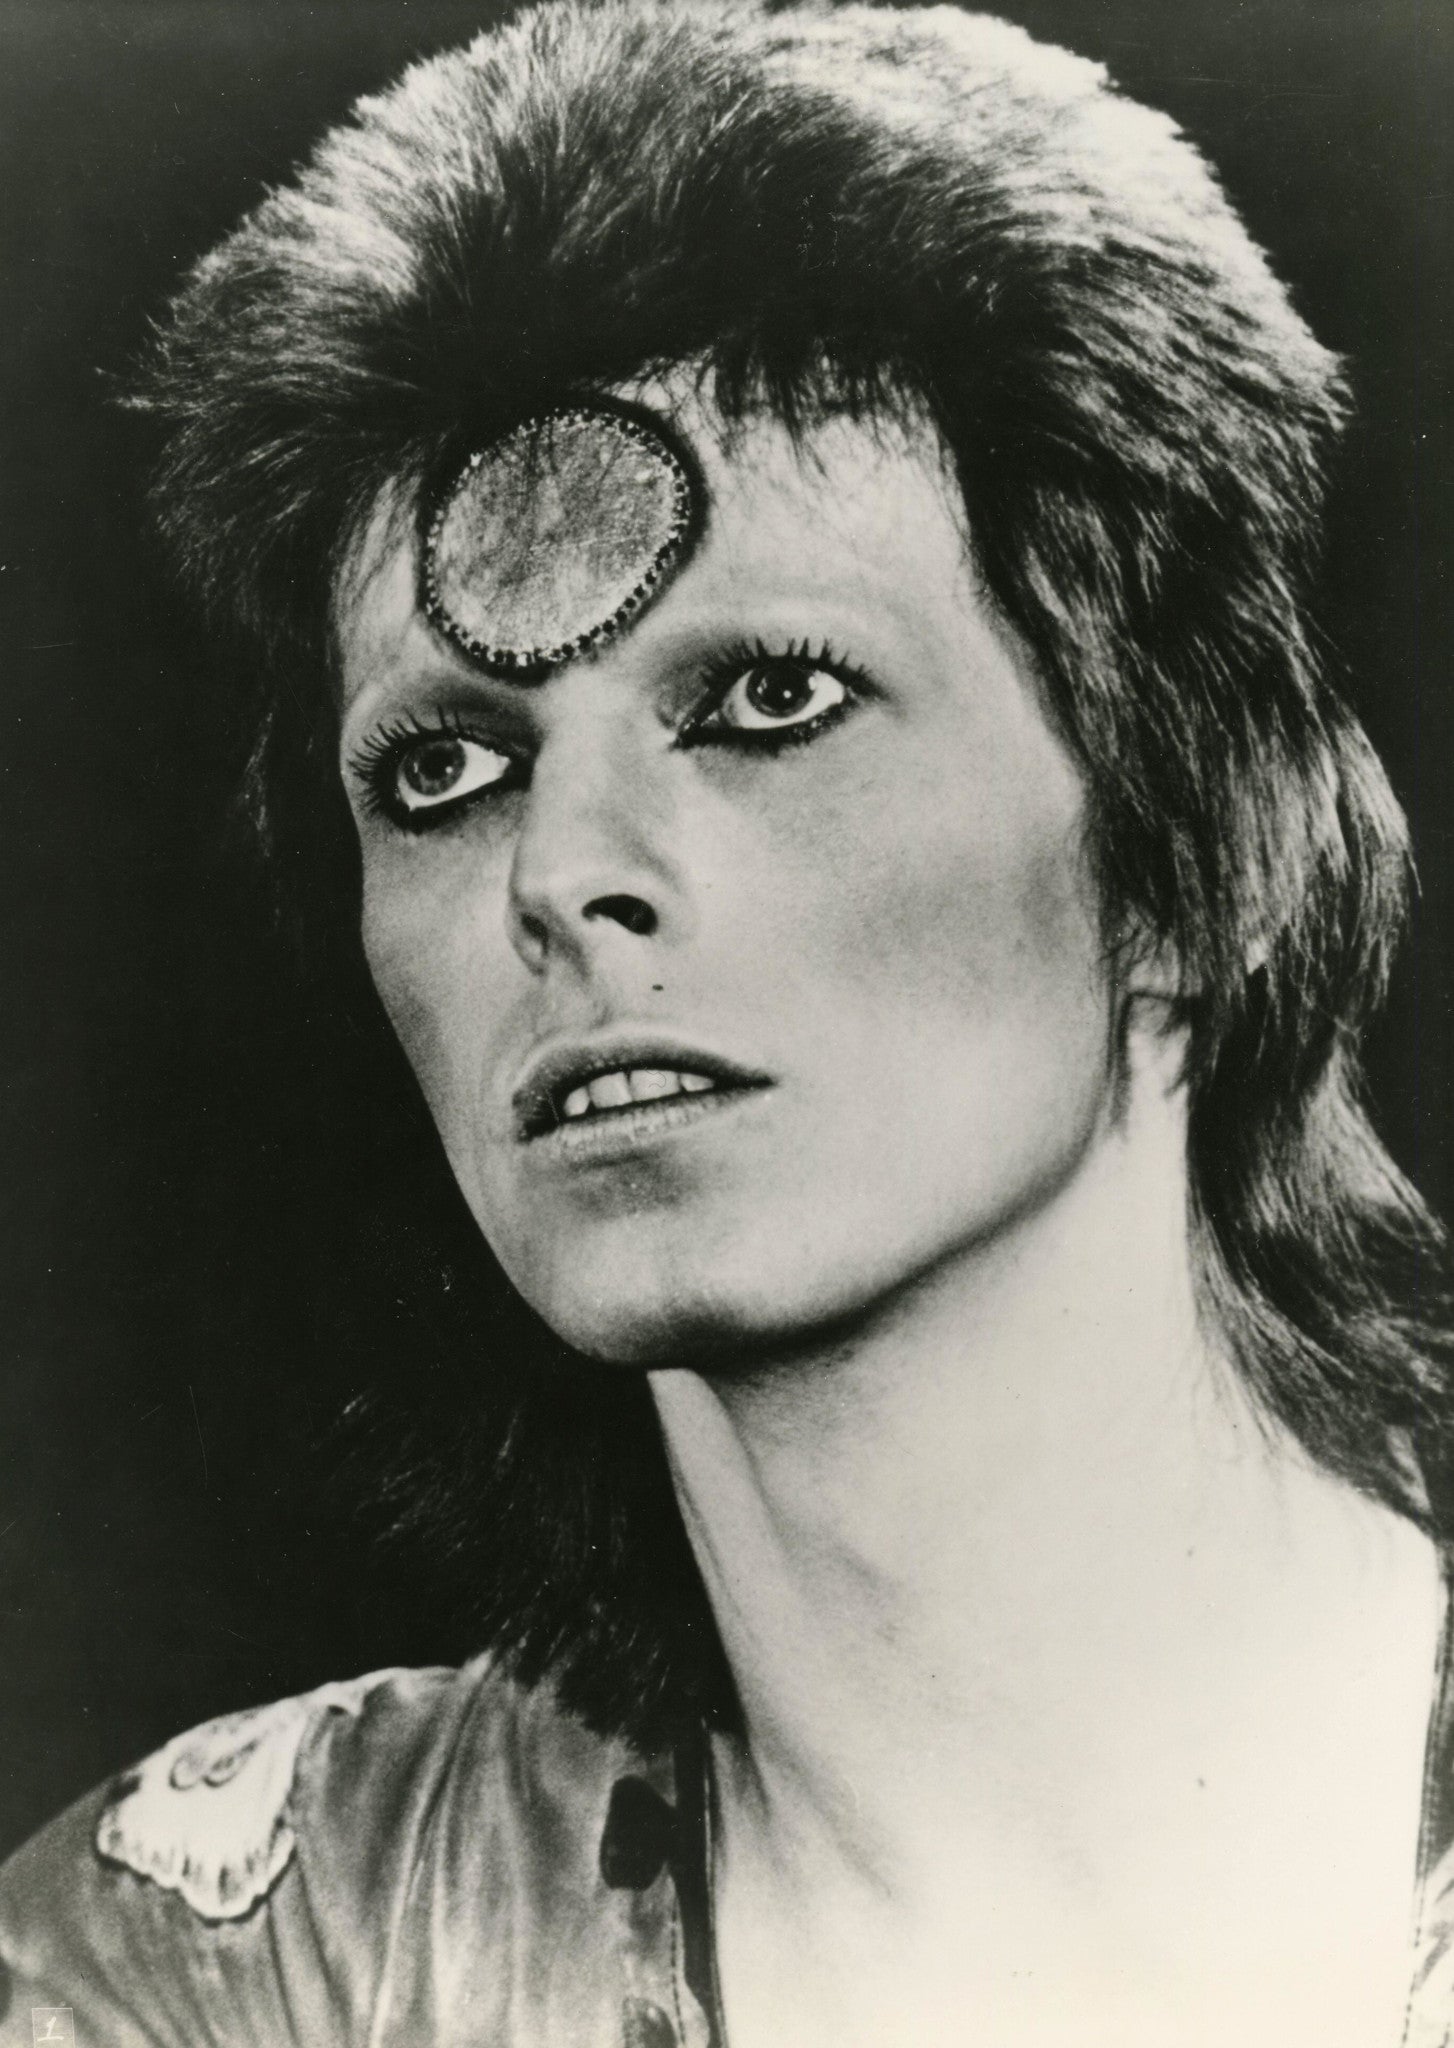 David Bowie - Ziggy Stardust - A3 Poster